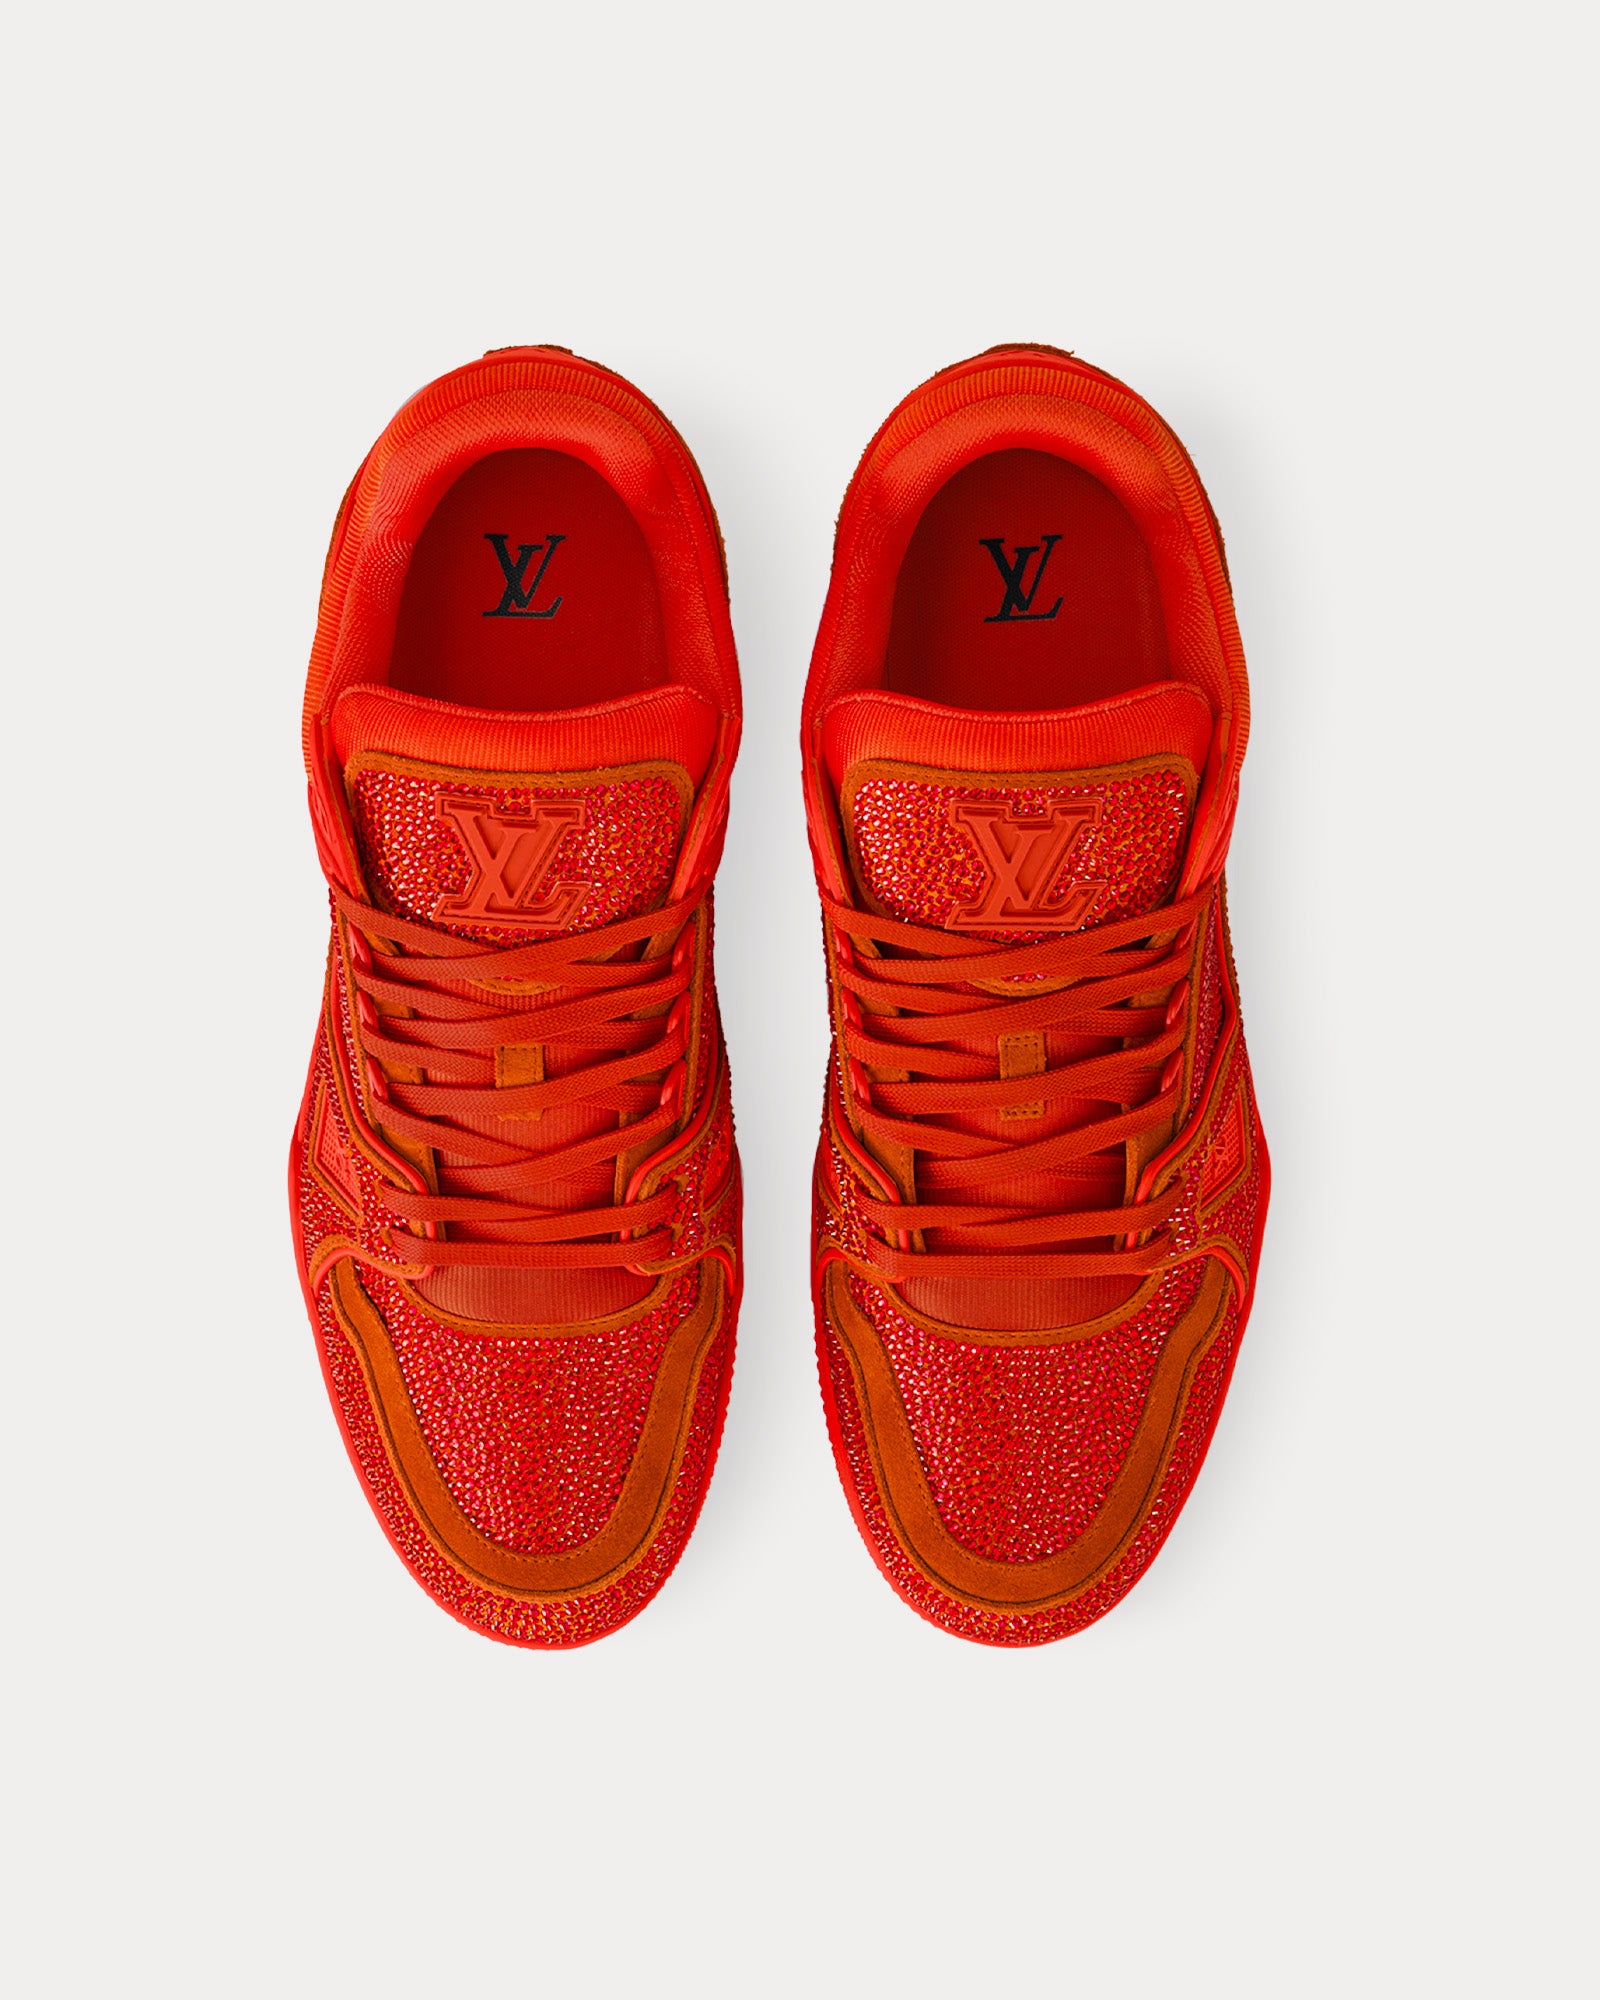 Louis Vuitton - LV Trainer Swarovski Crystals Orange Low Top Sneakers